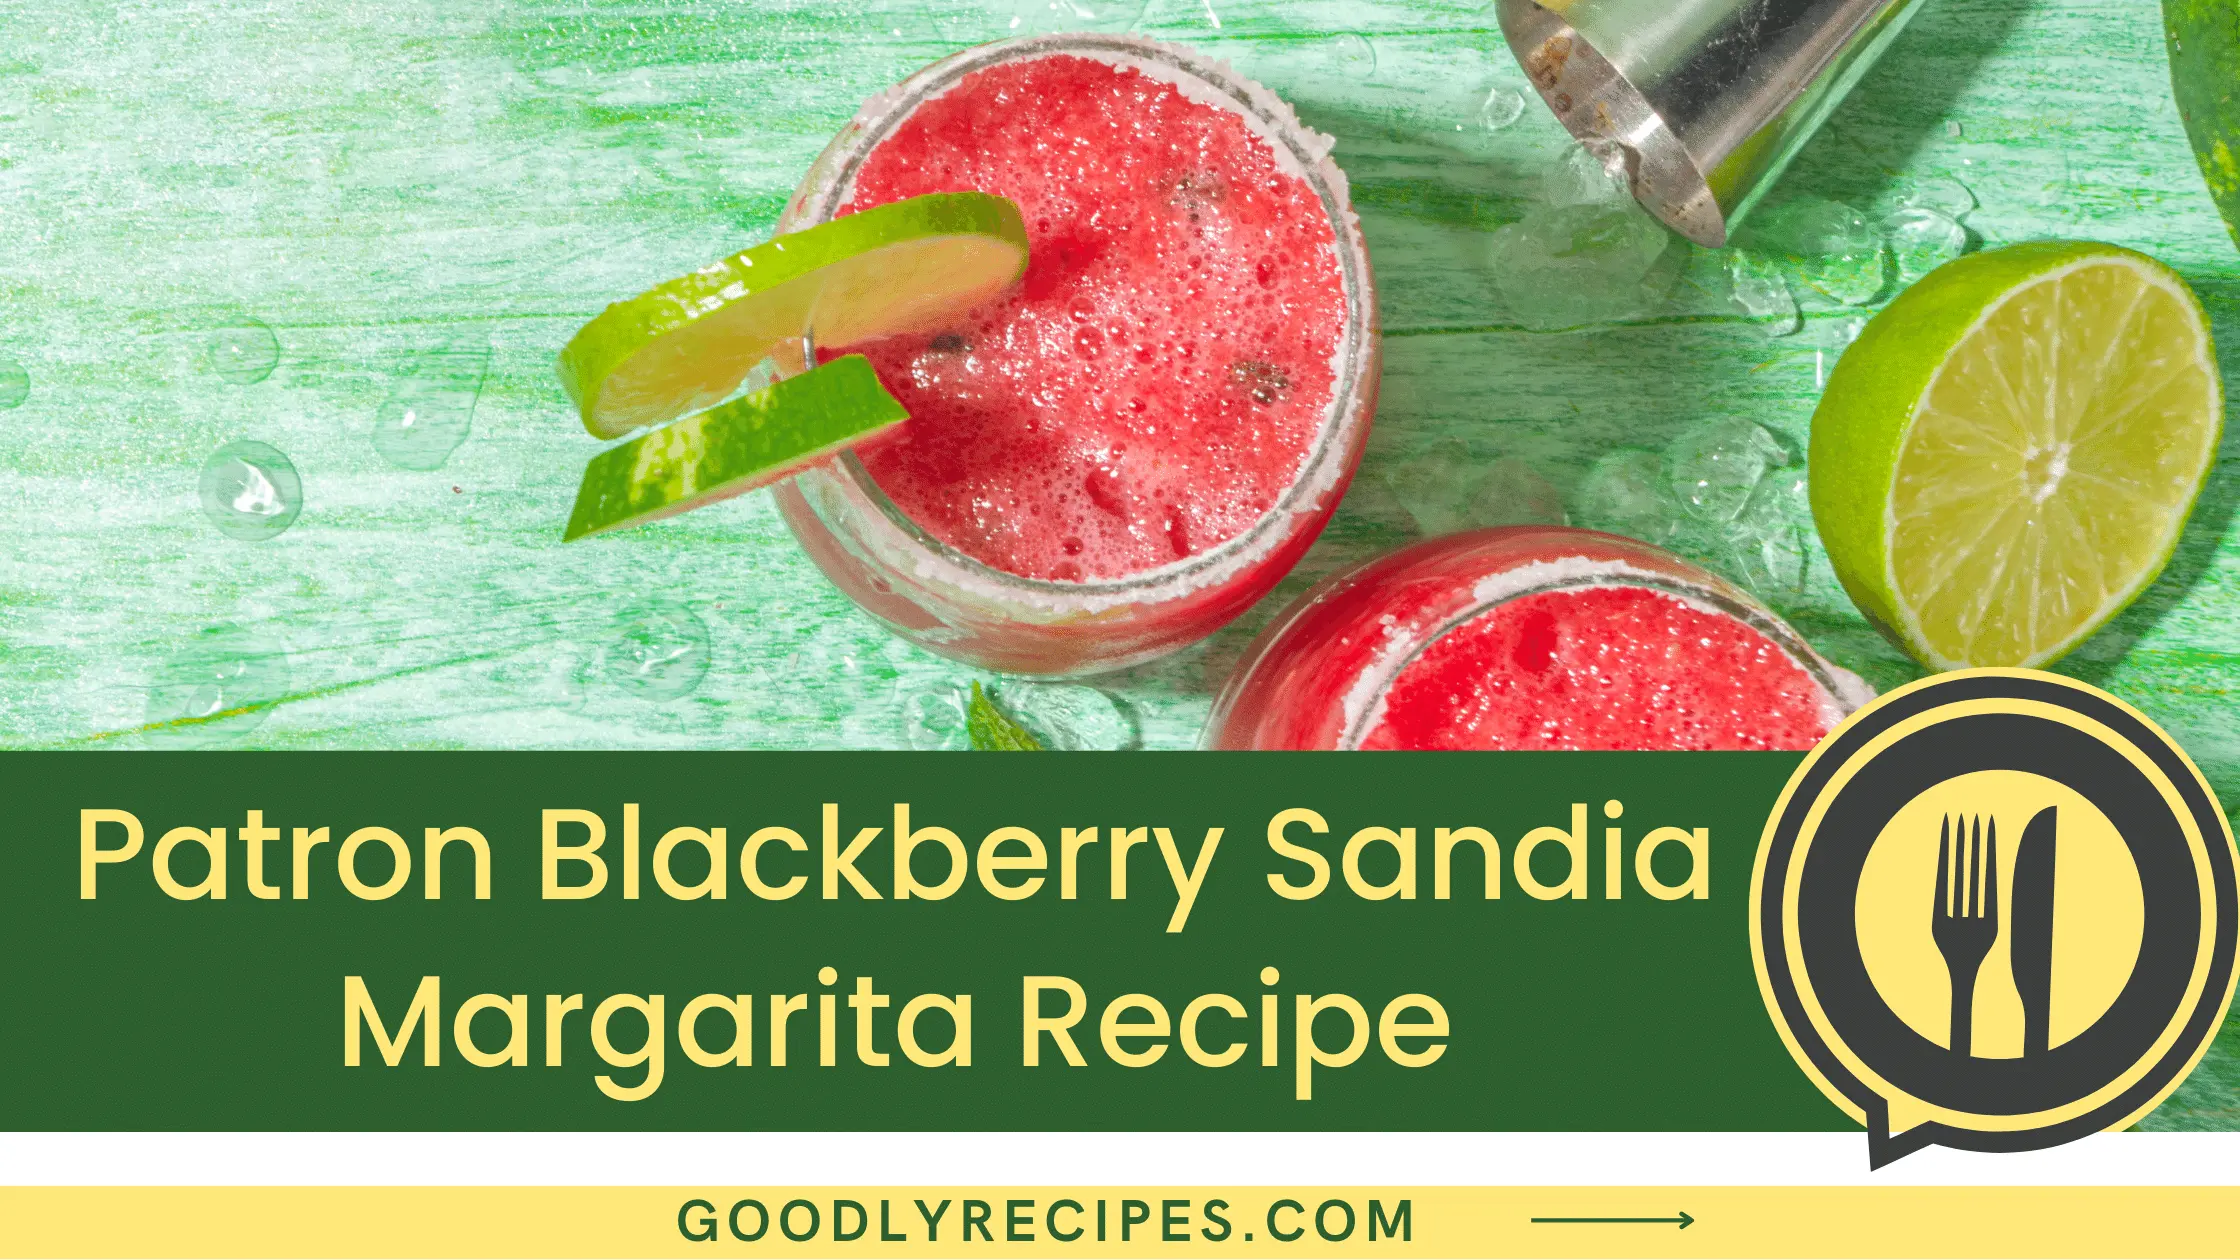 Patron Blackberry Sandia Margarita Recipe - For Food Lovers